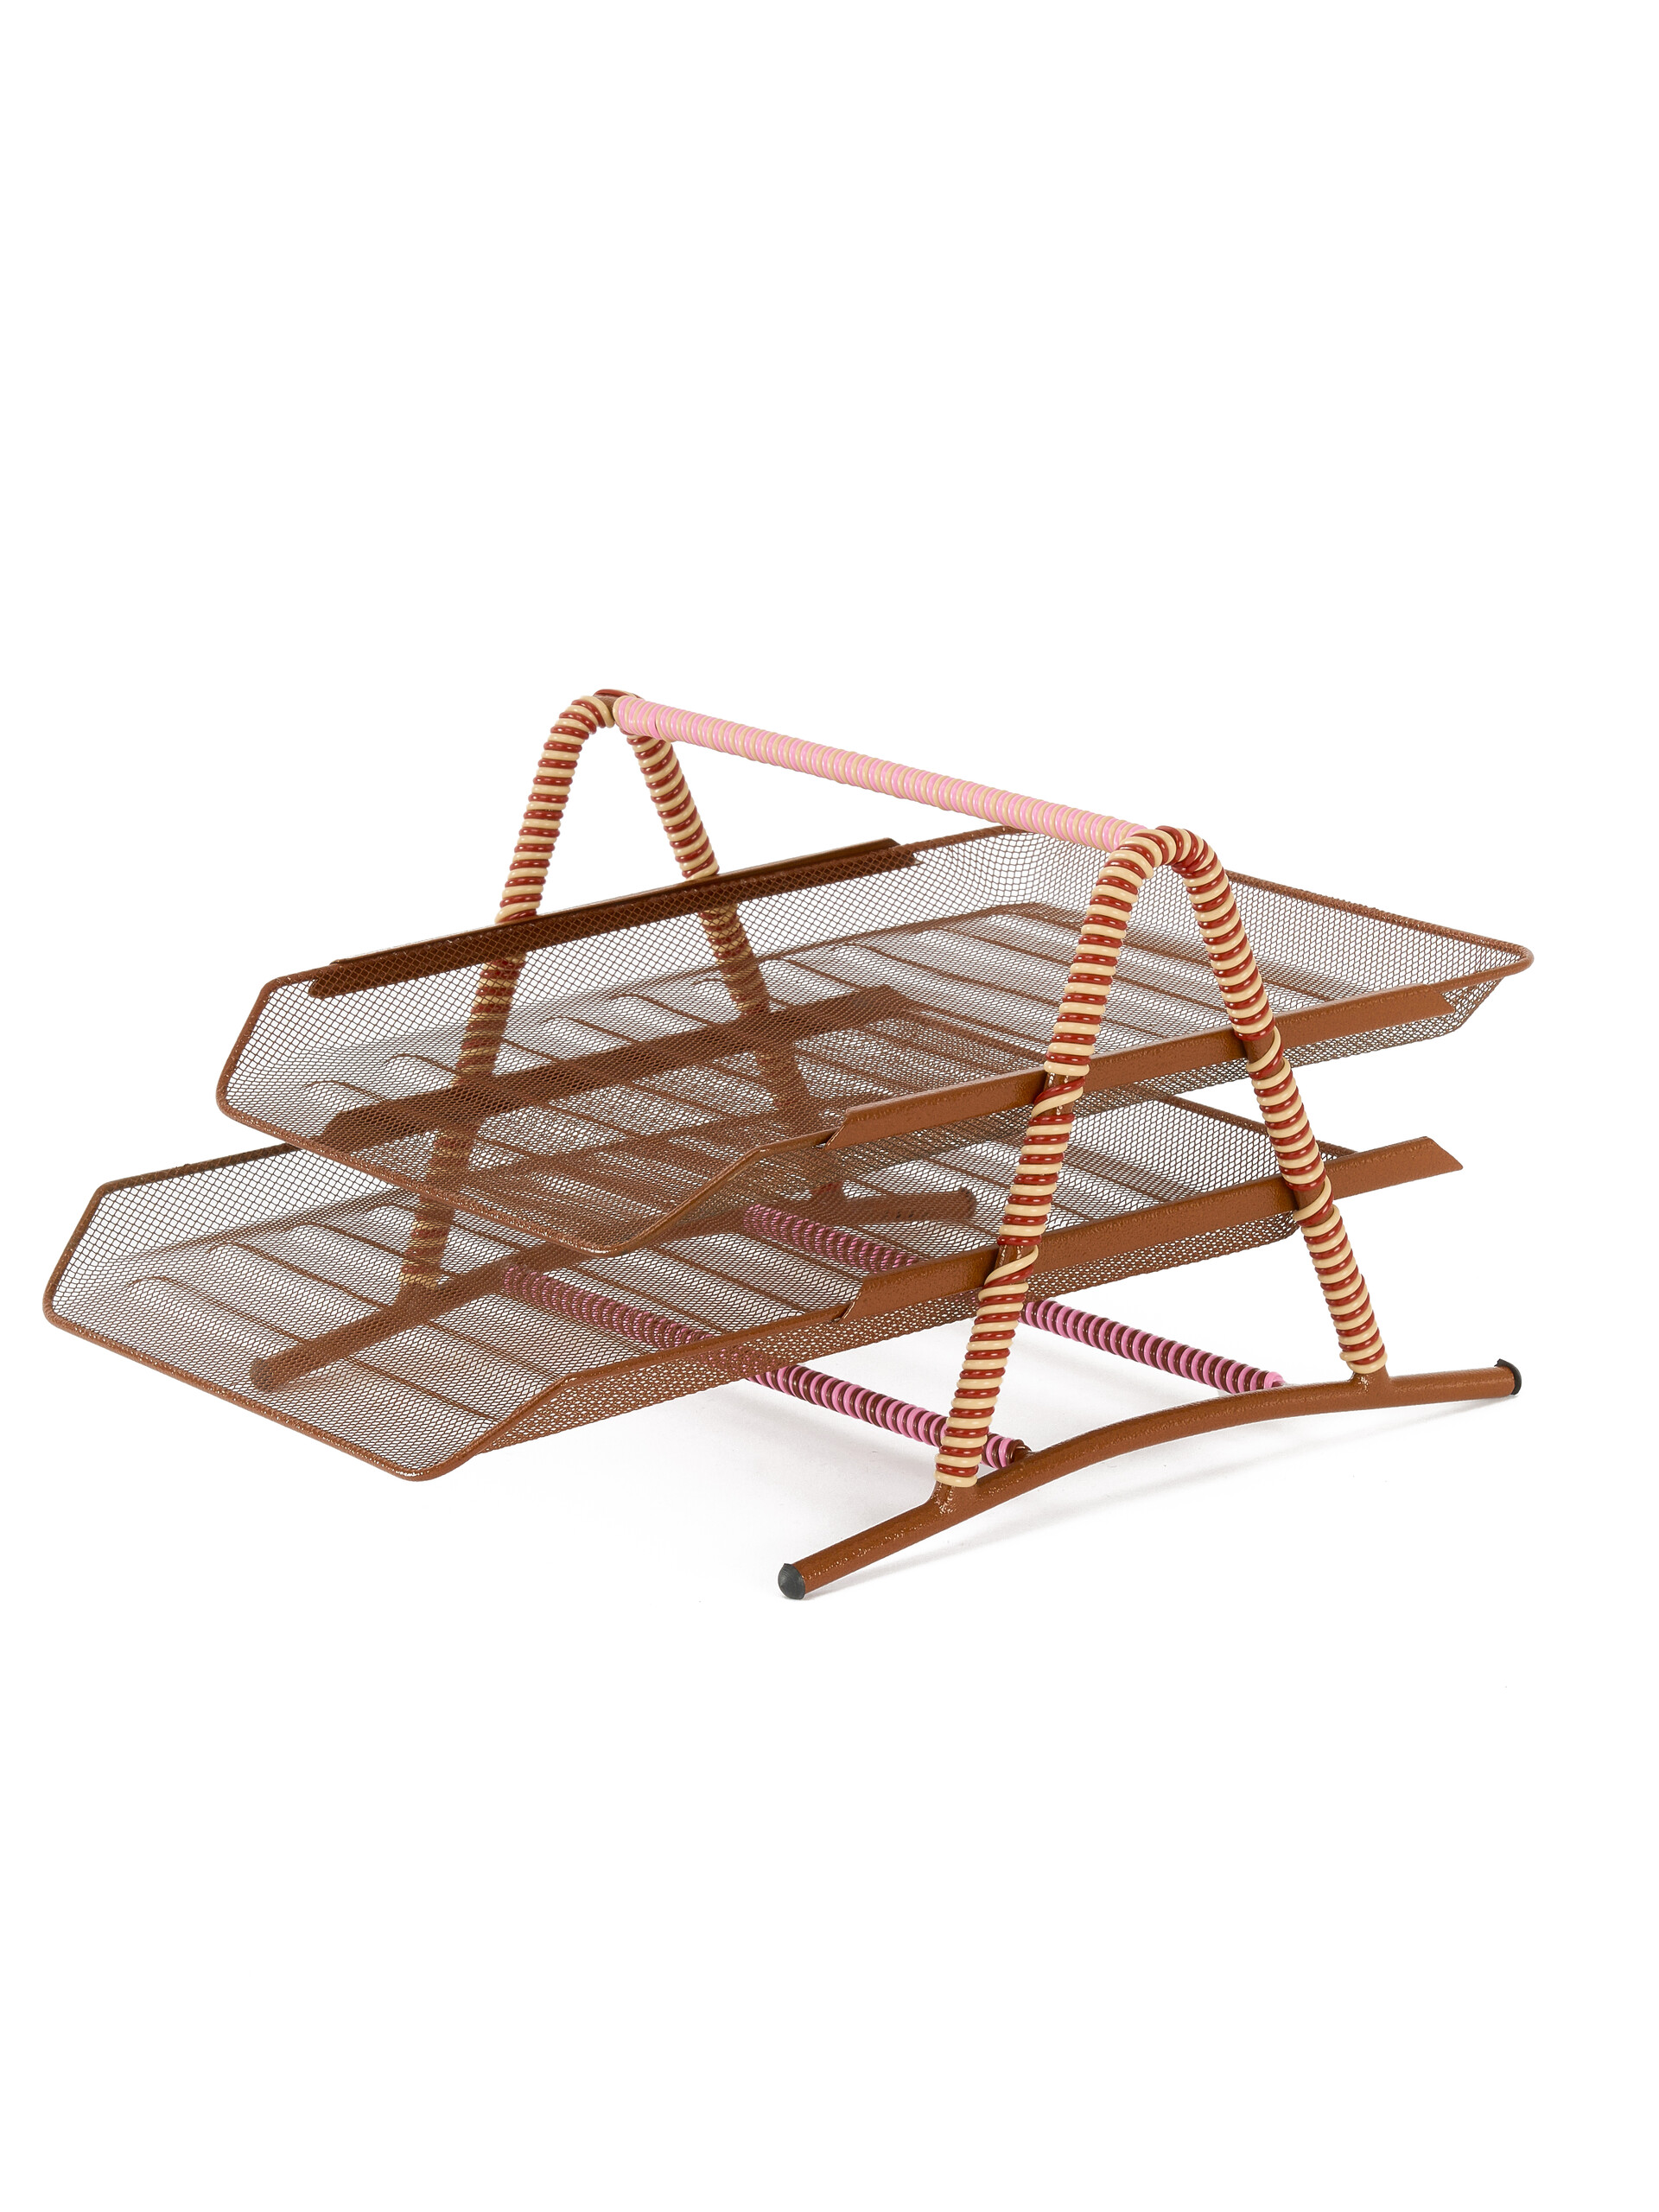 Brown Marni Market tiered filing tray - Furniture - Image 3